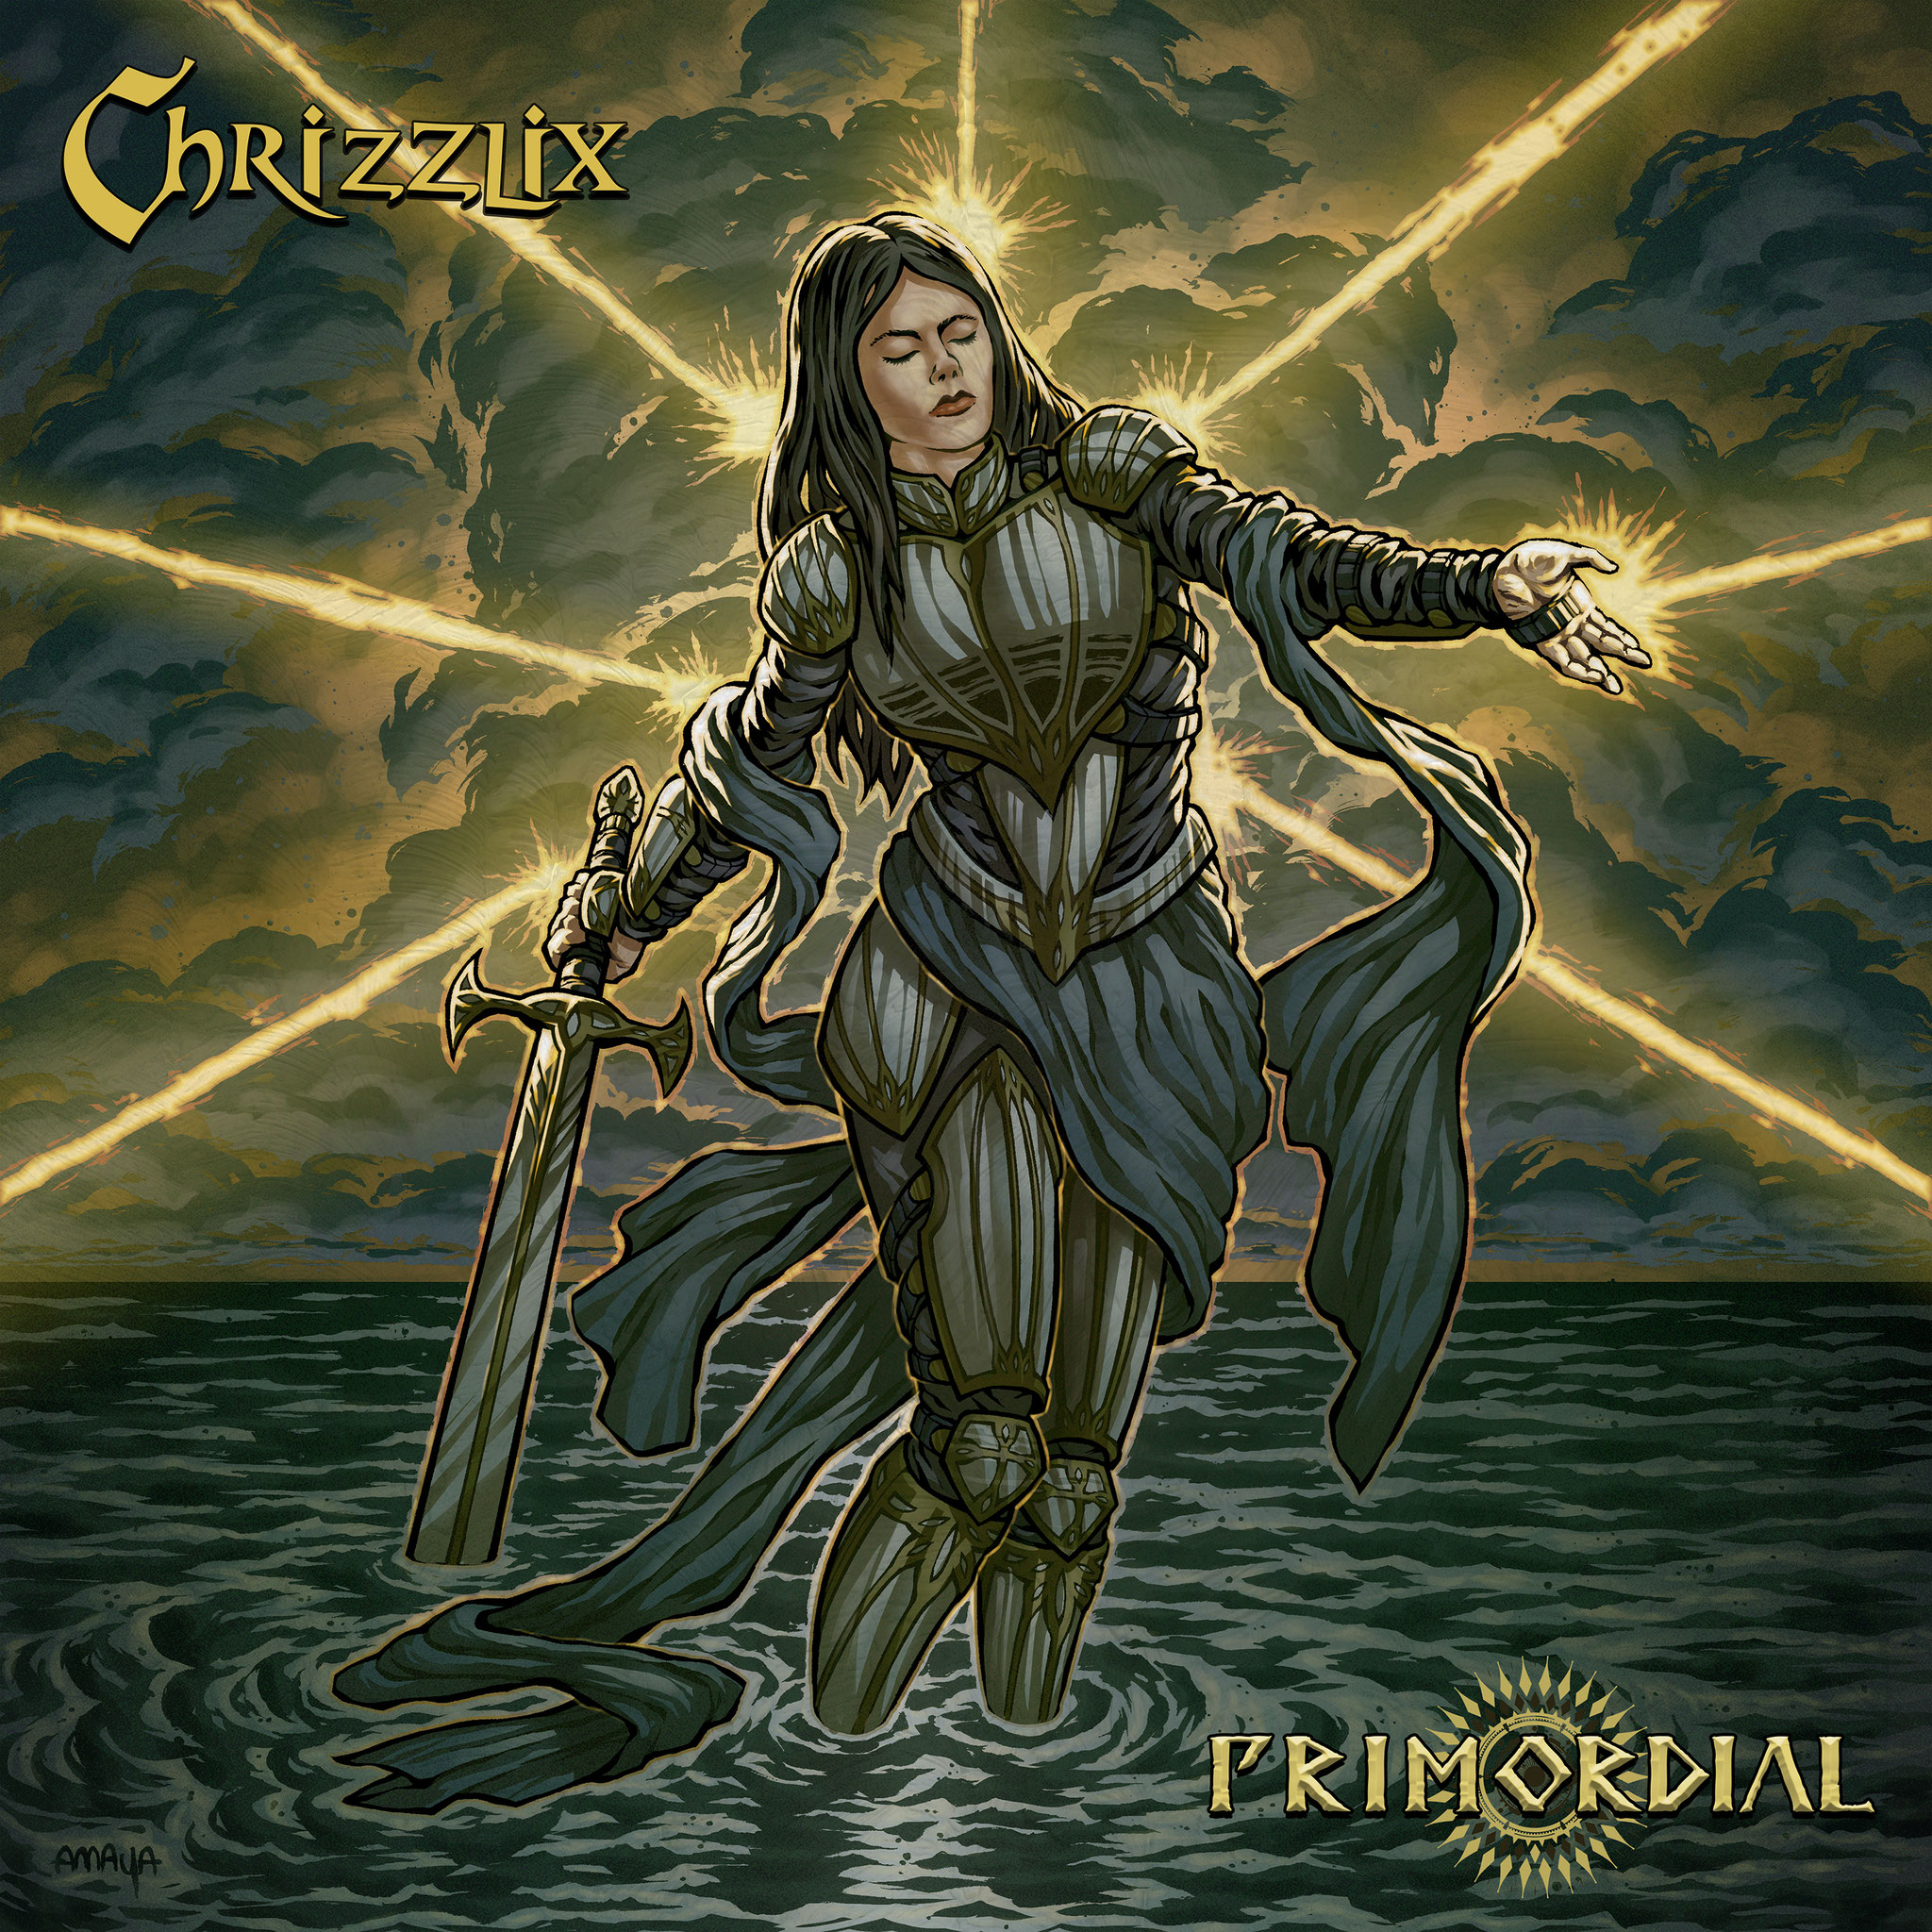 Chrizzlix - Primordial